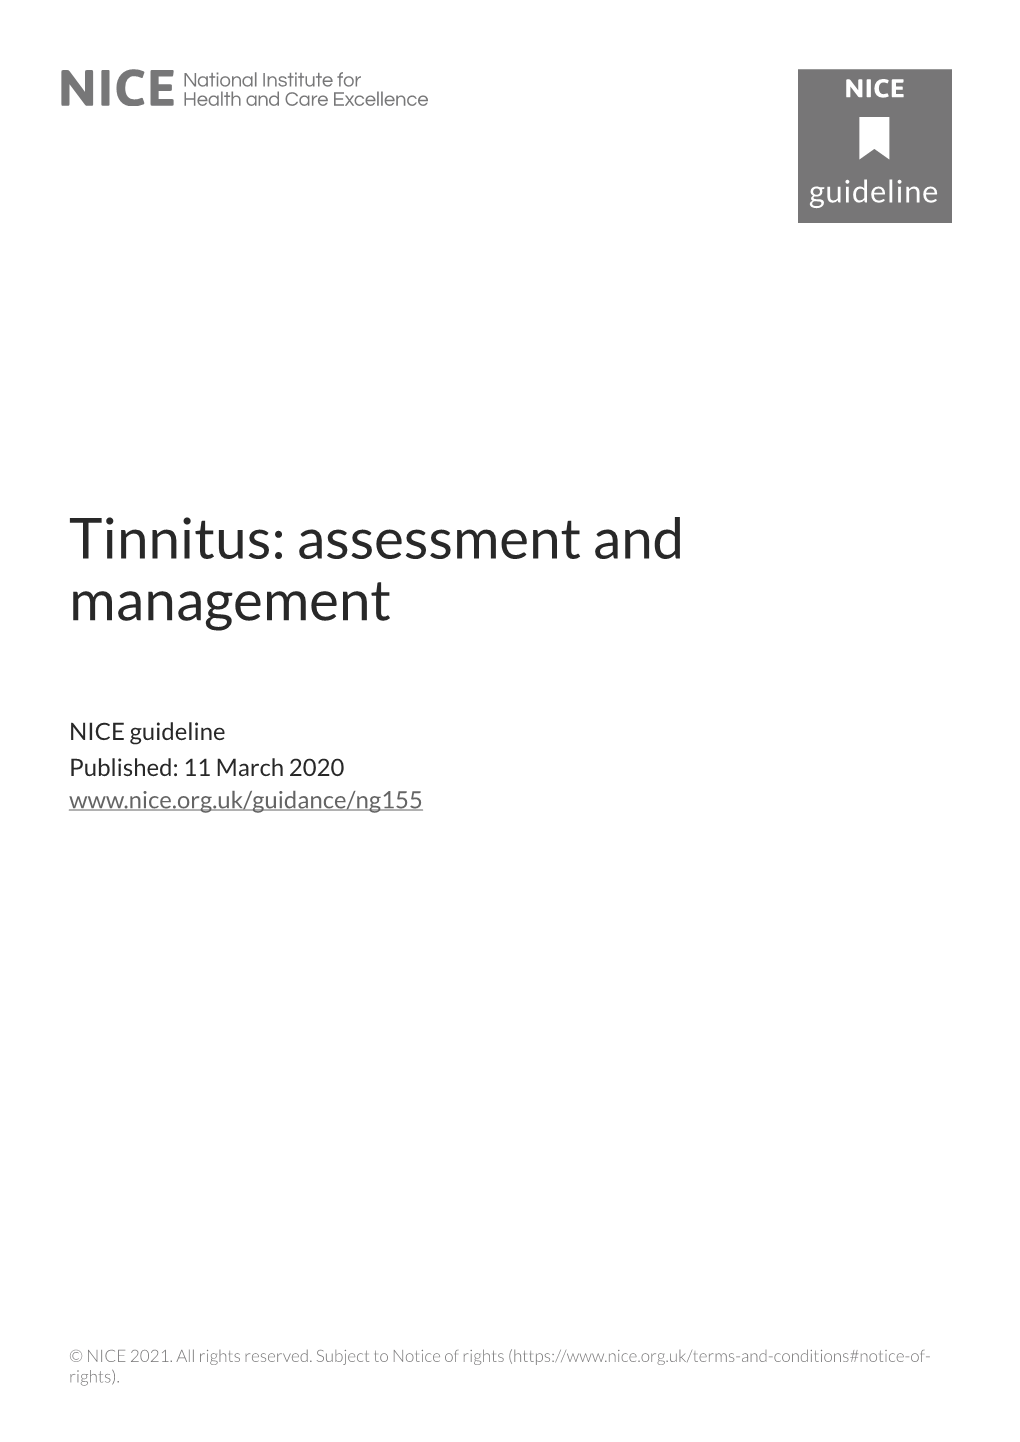 Tinnitus: Assessment and Management (NG155)